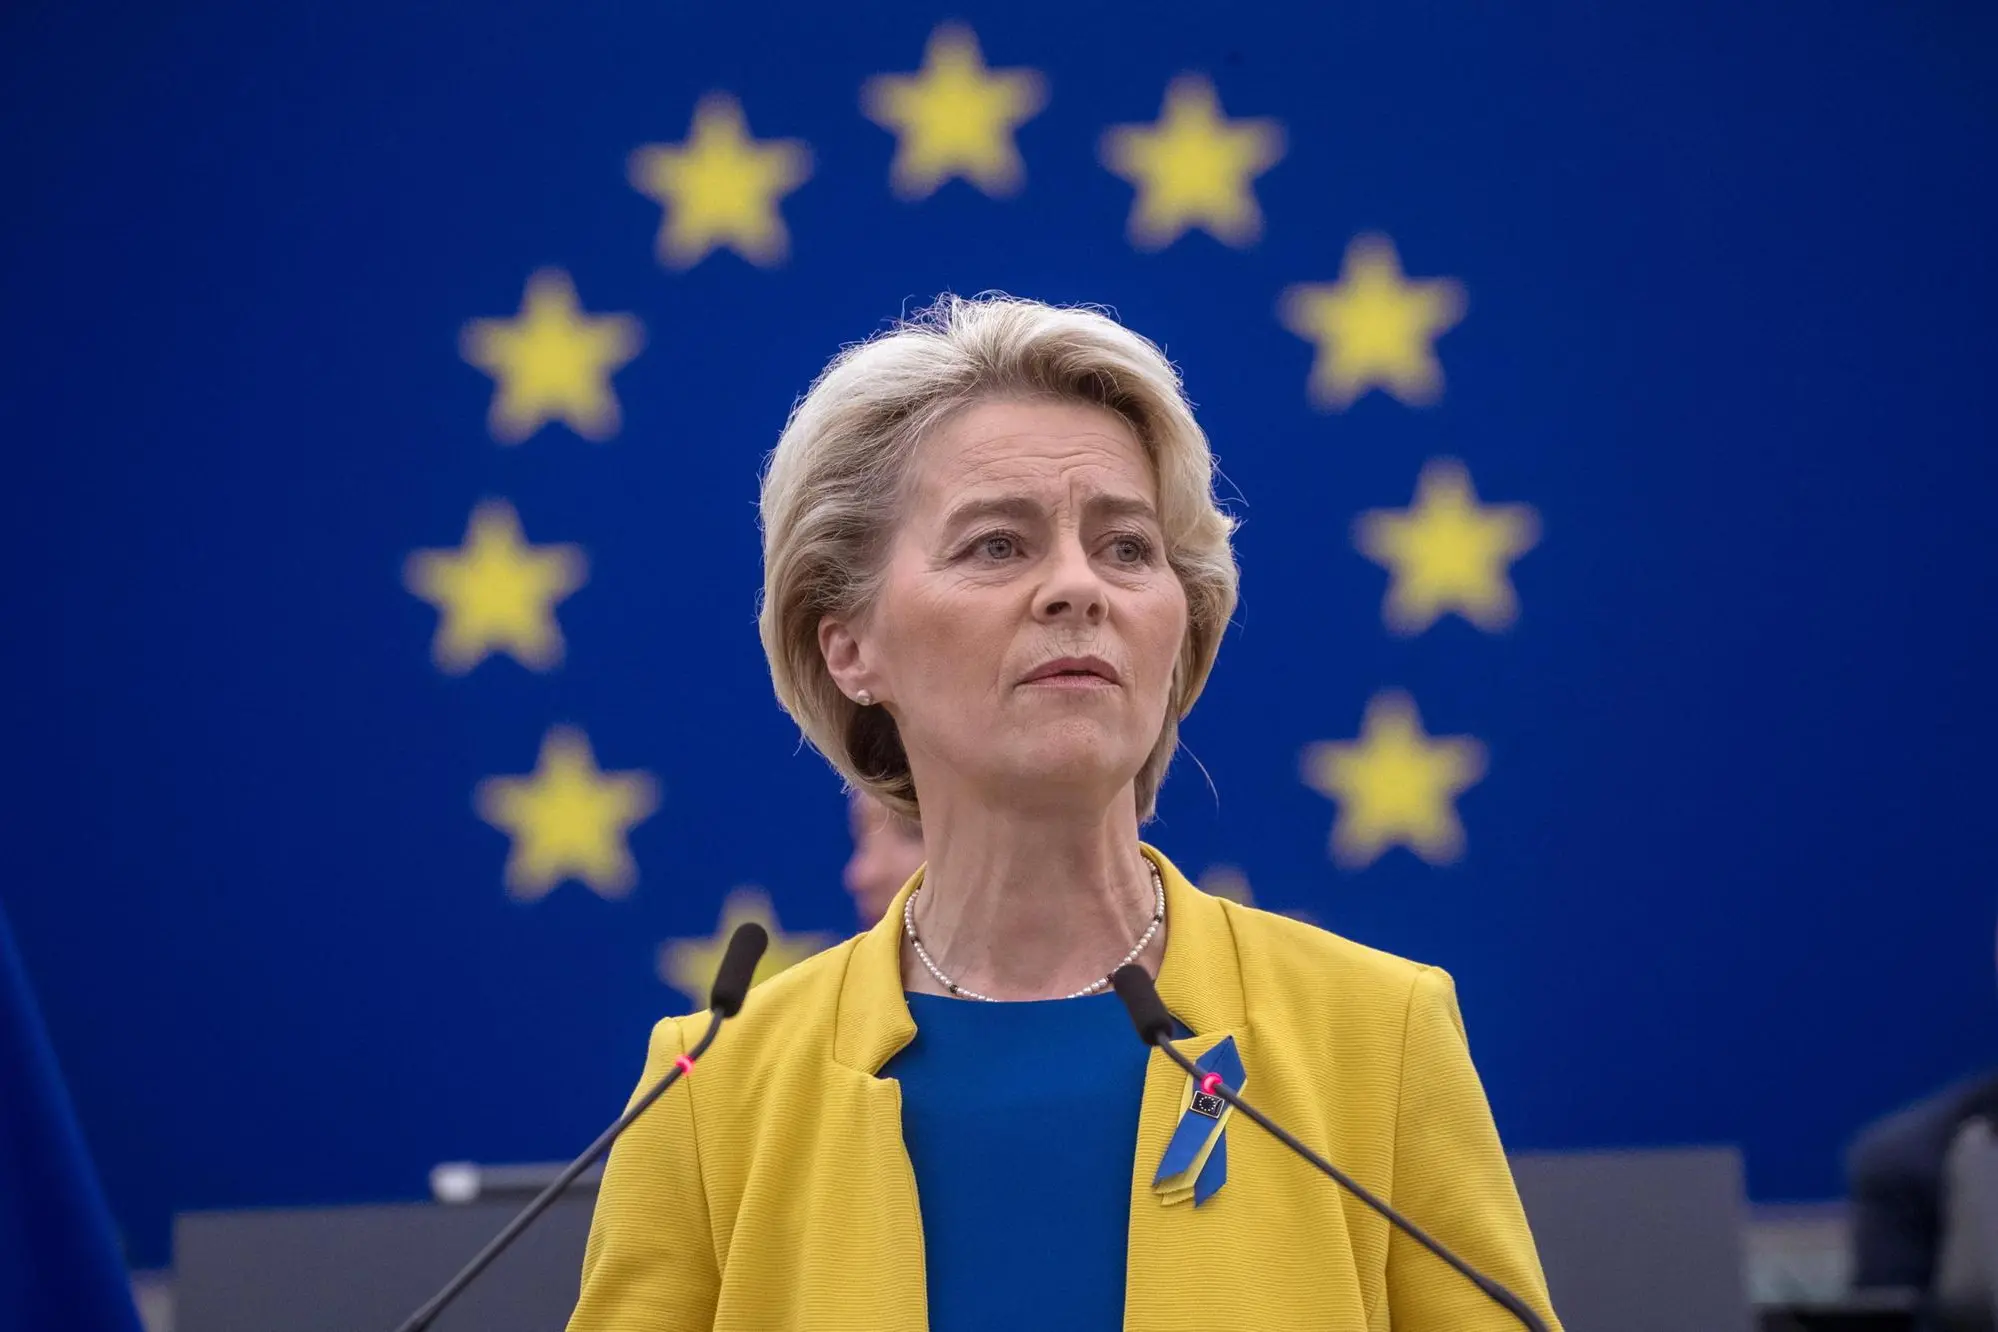 European Commission President Ursula von der Leyen delivers a speech during a debate on 'The State of the European Union' at the European Parliament in Strasbourg, France, 14 September 2022. ANSA/CHRISTOPHE PETIT TESSON